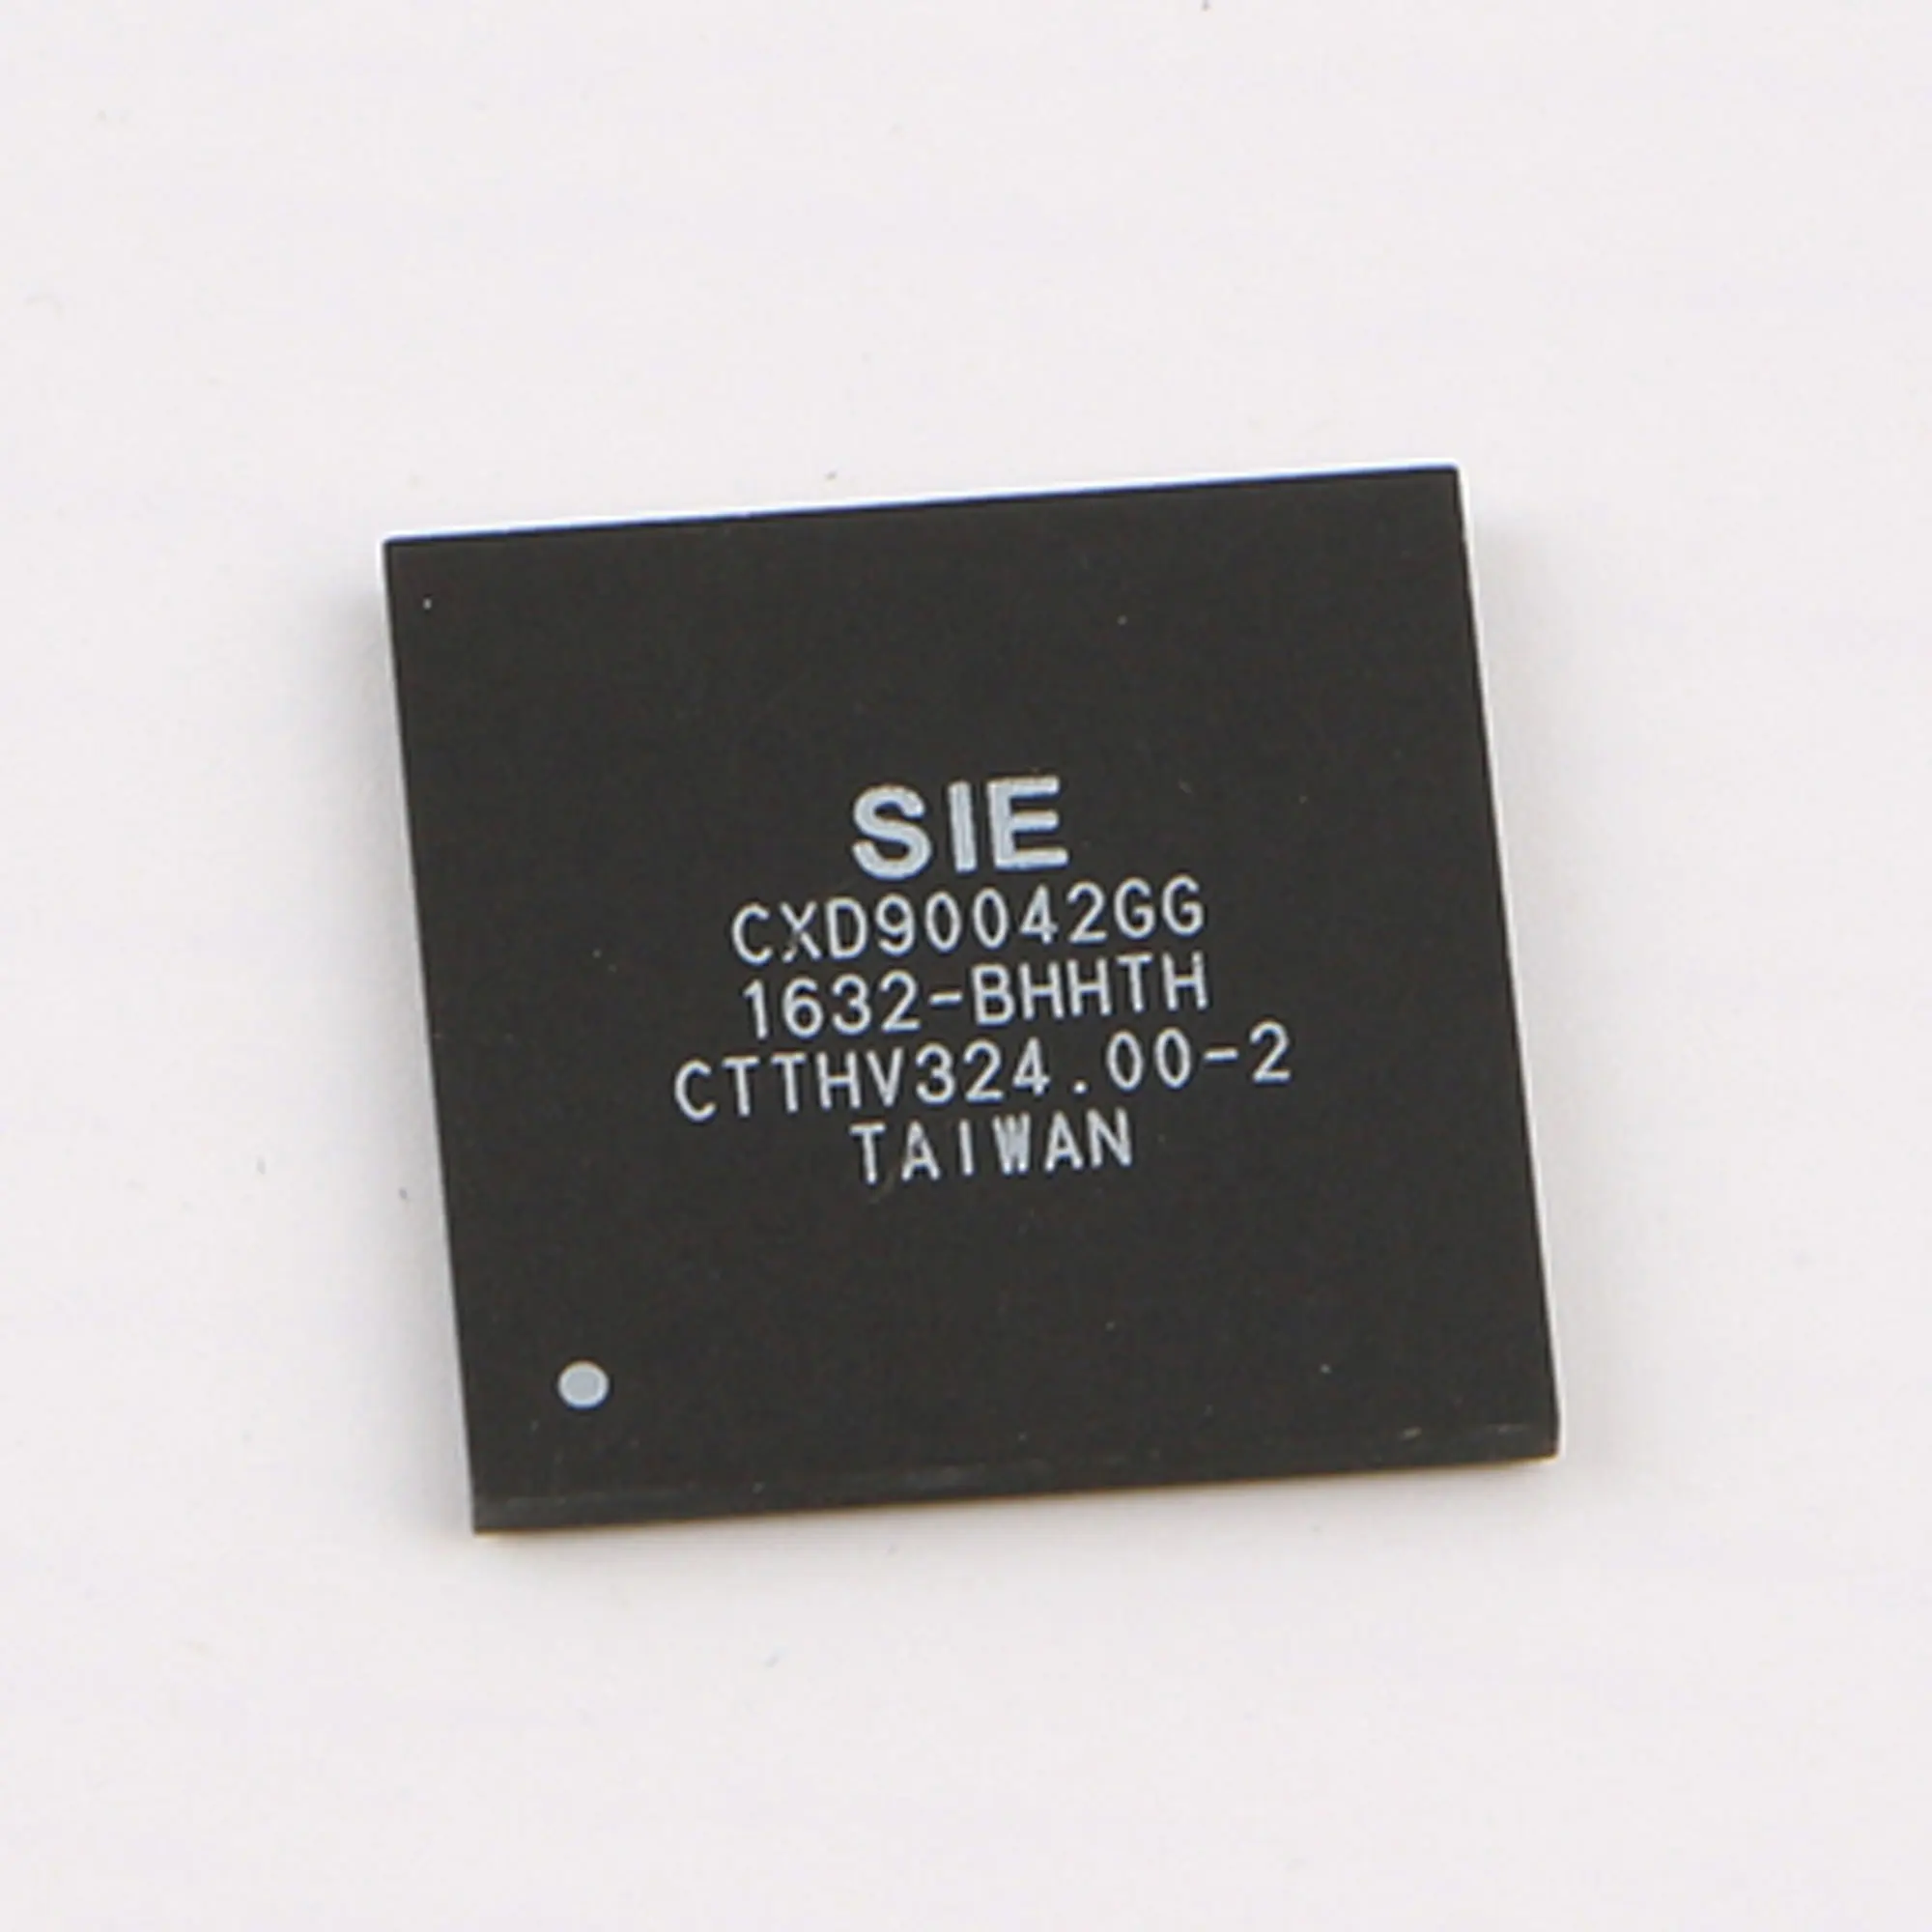 MerrillchipOriginal Electronic Components PS4 Pro South Bridge Chip Slim CXD90042GG Fast Delivery